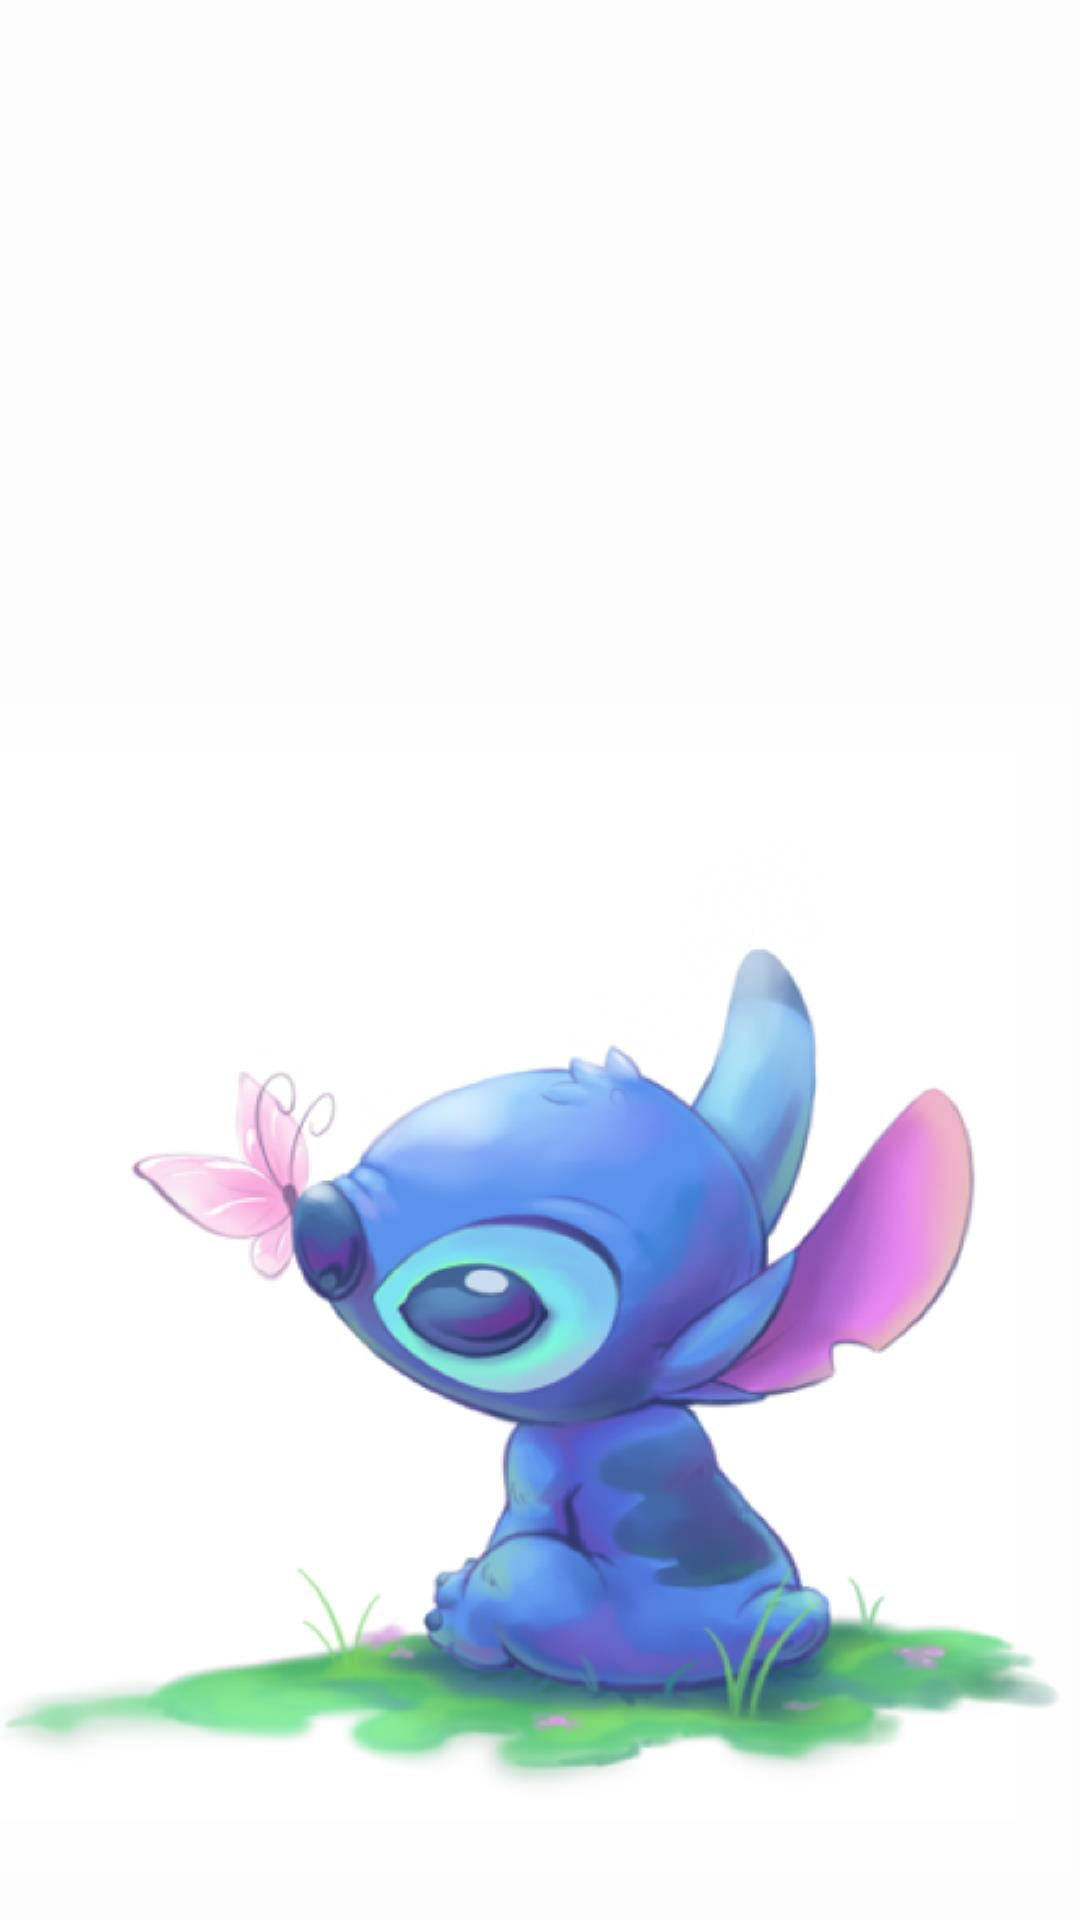 Mellowgrafik Stitch Disney Wallpaper